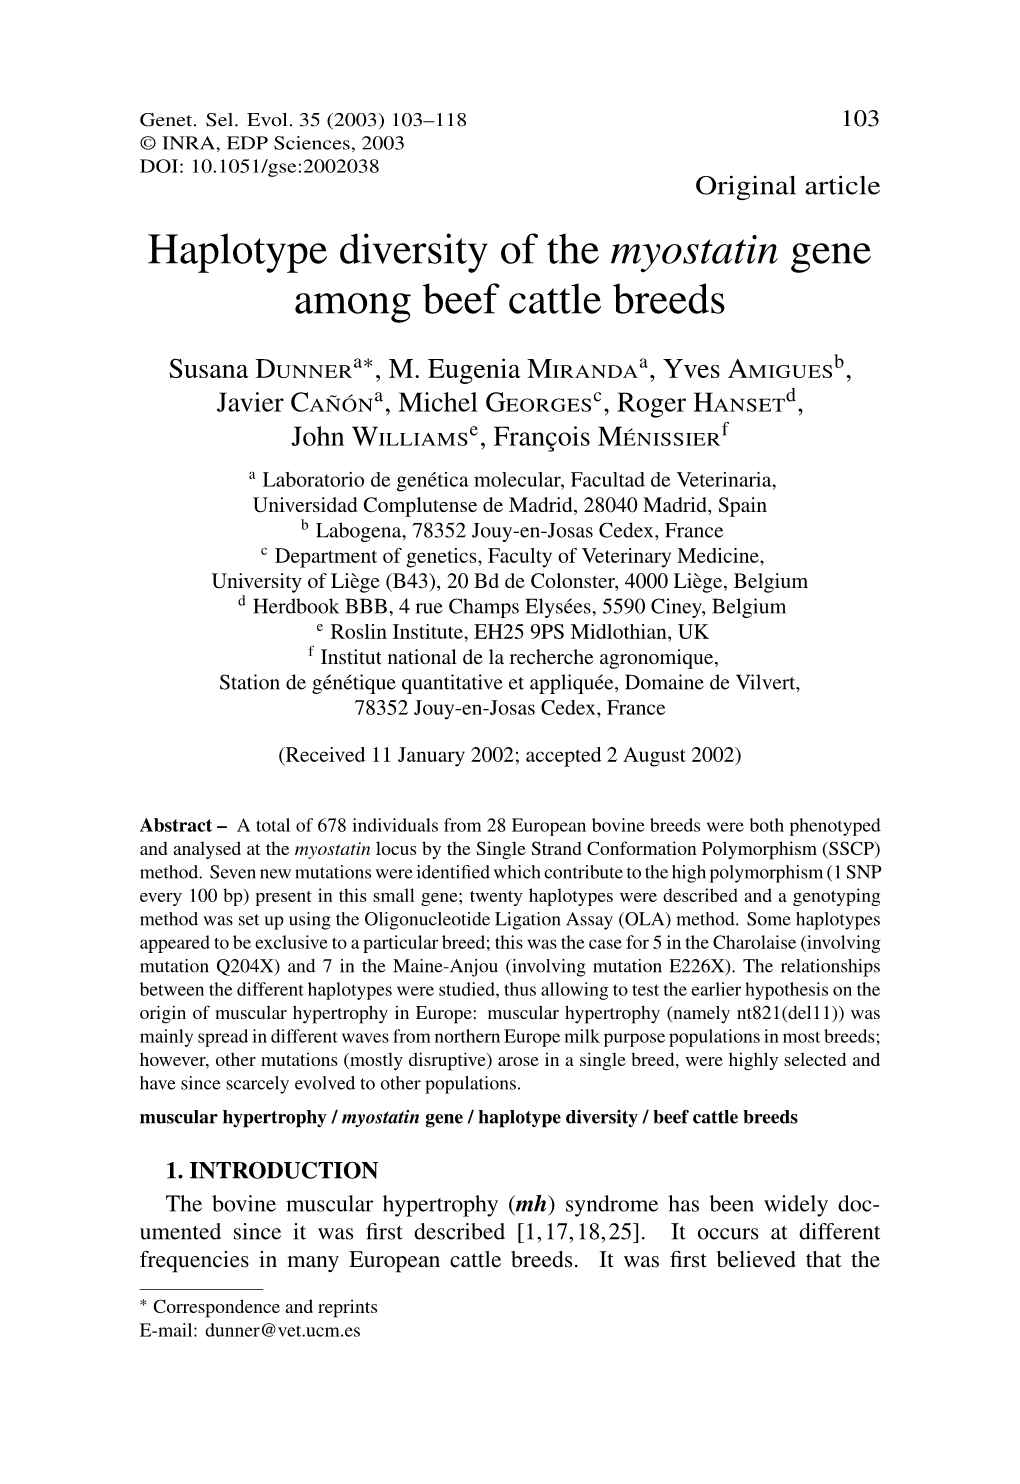 Haplotype Diversity of the Myostatin Gene Among Beef Cattle Breeds